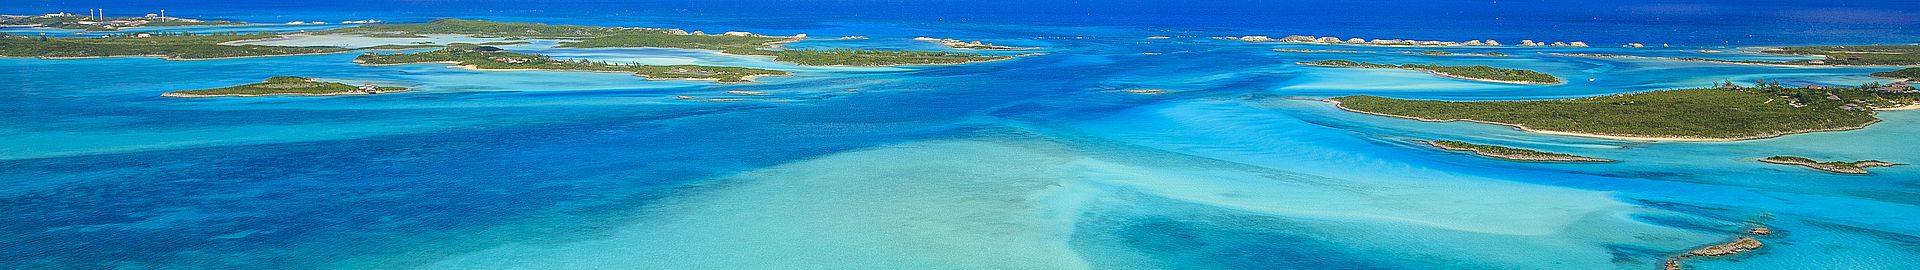 Bahamas-Inseln